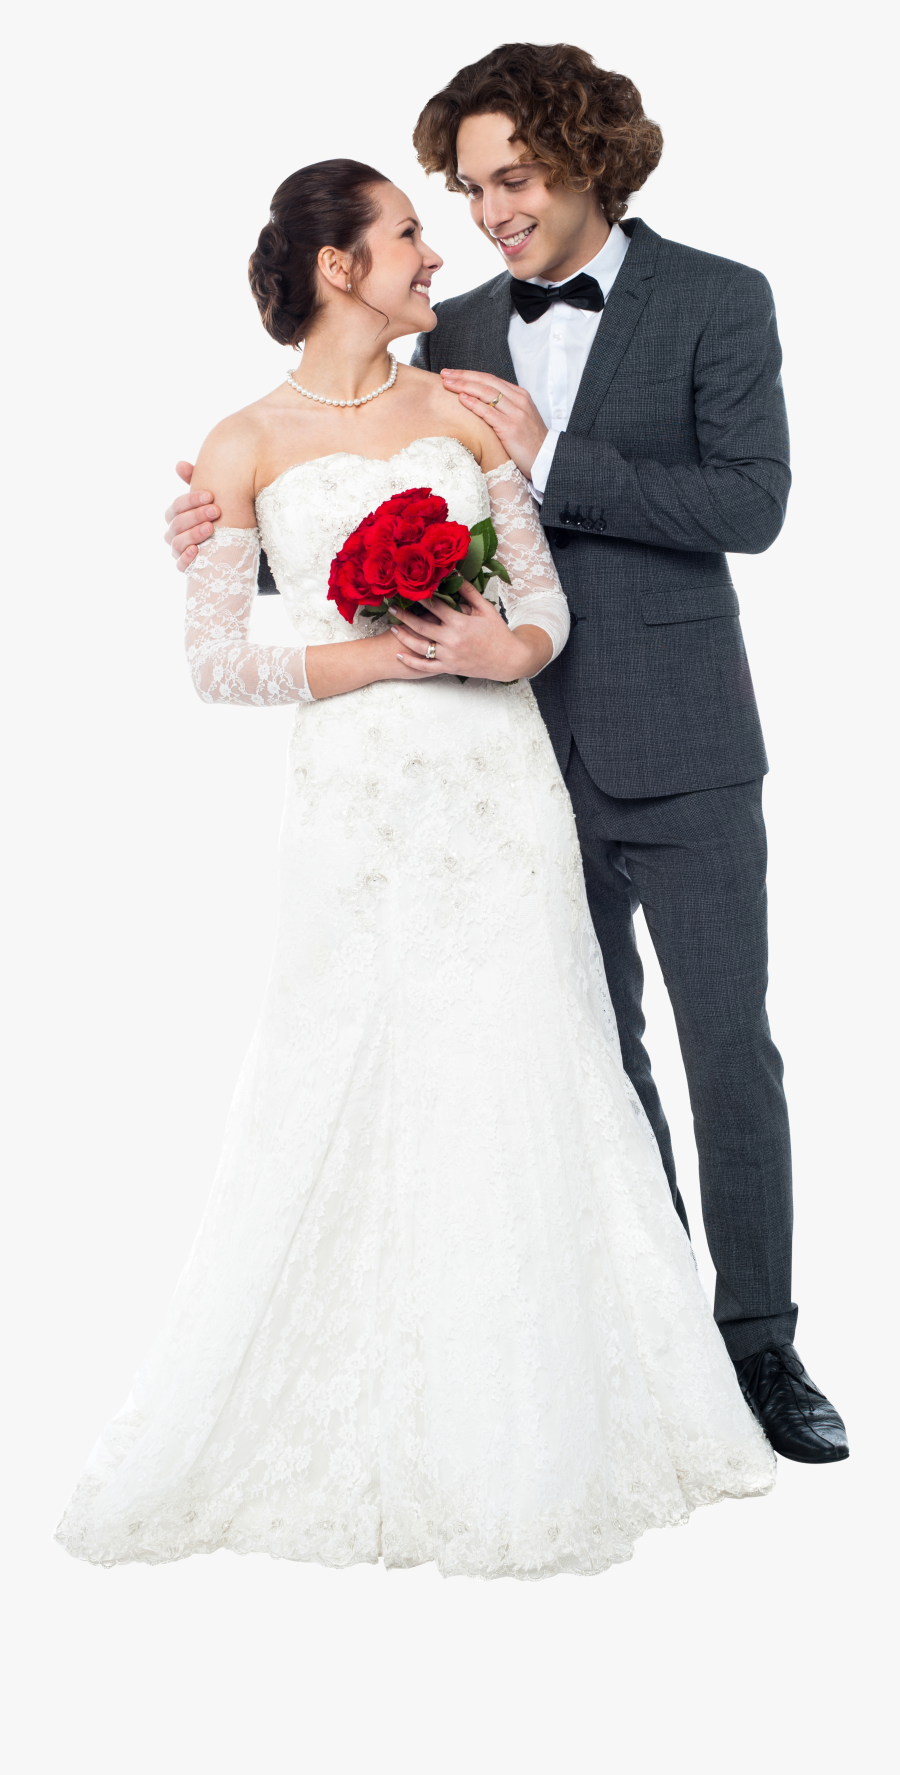 Wedding Couple Png Image - Wedding Couple Images Hd, Transparent Clipart